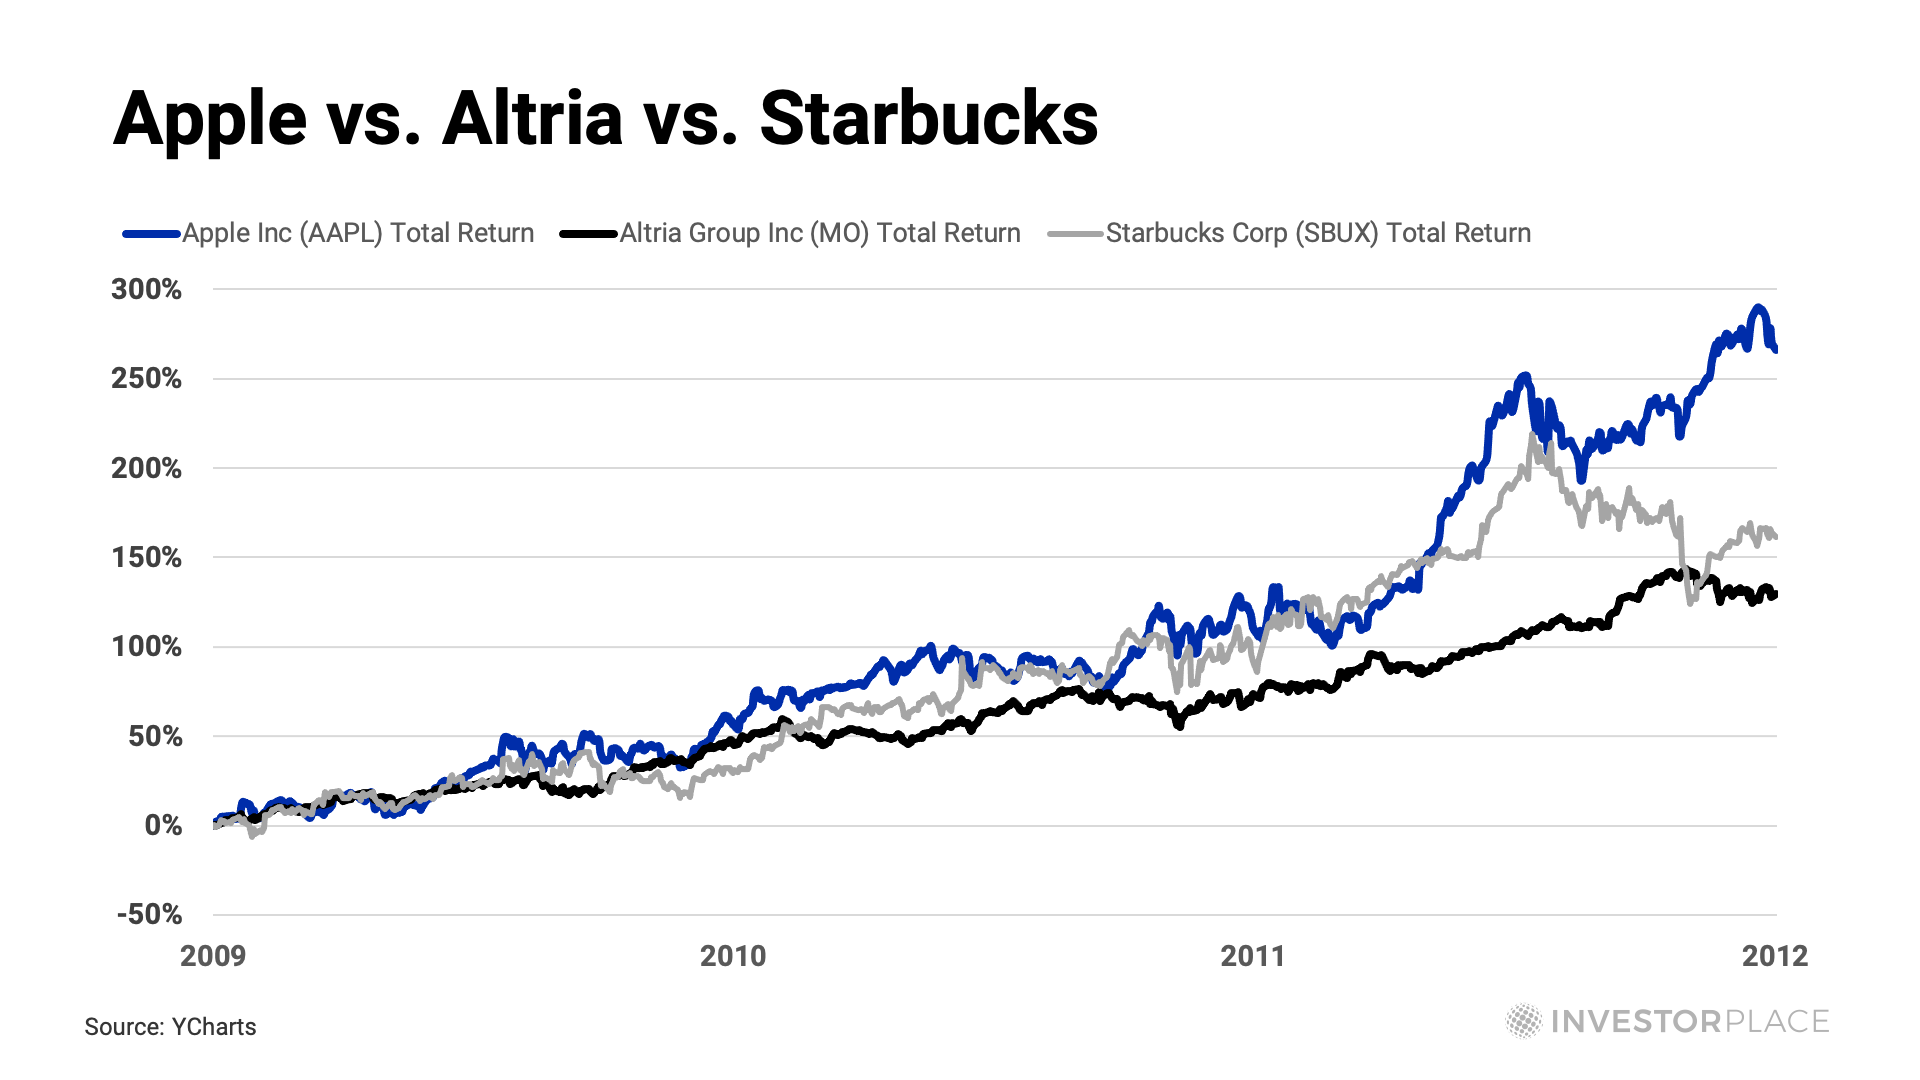 Chart of Apple versus Altria versus Starbucks stock from 2009 to 2012